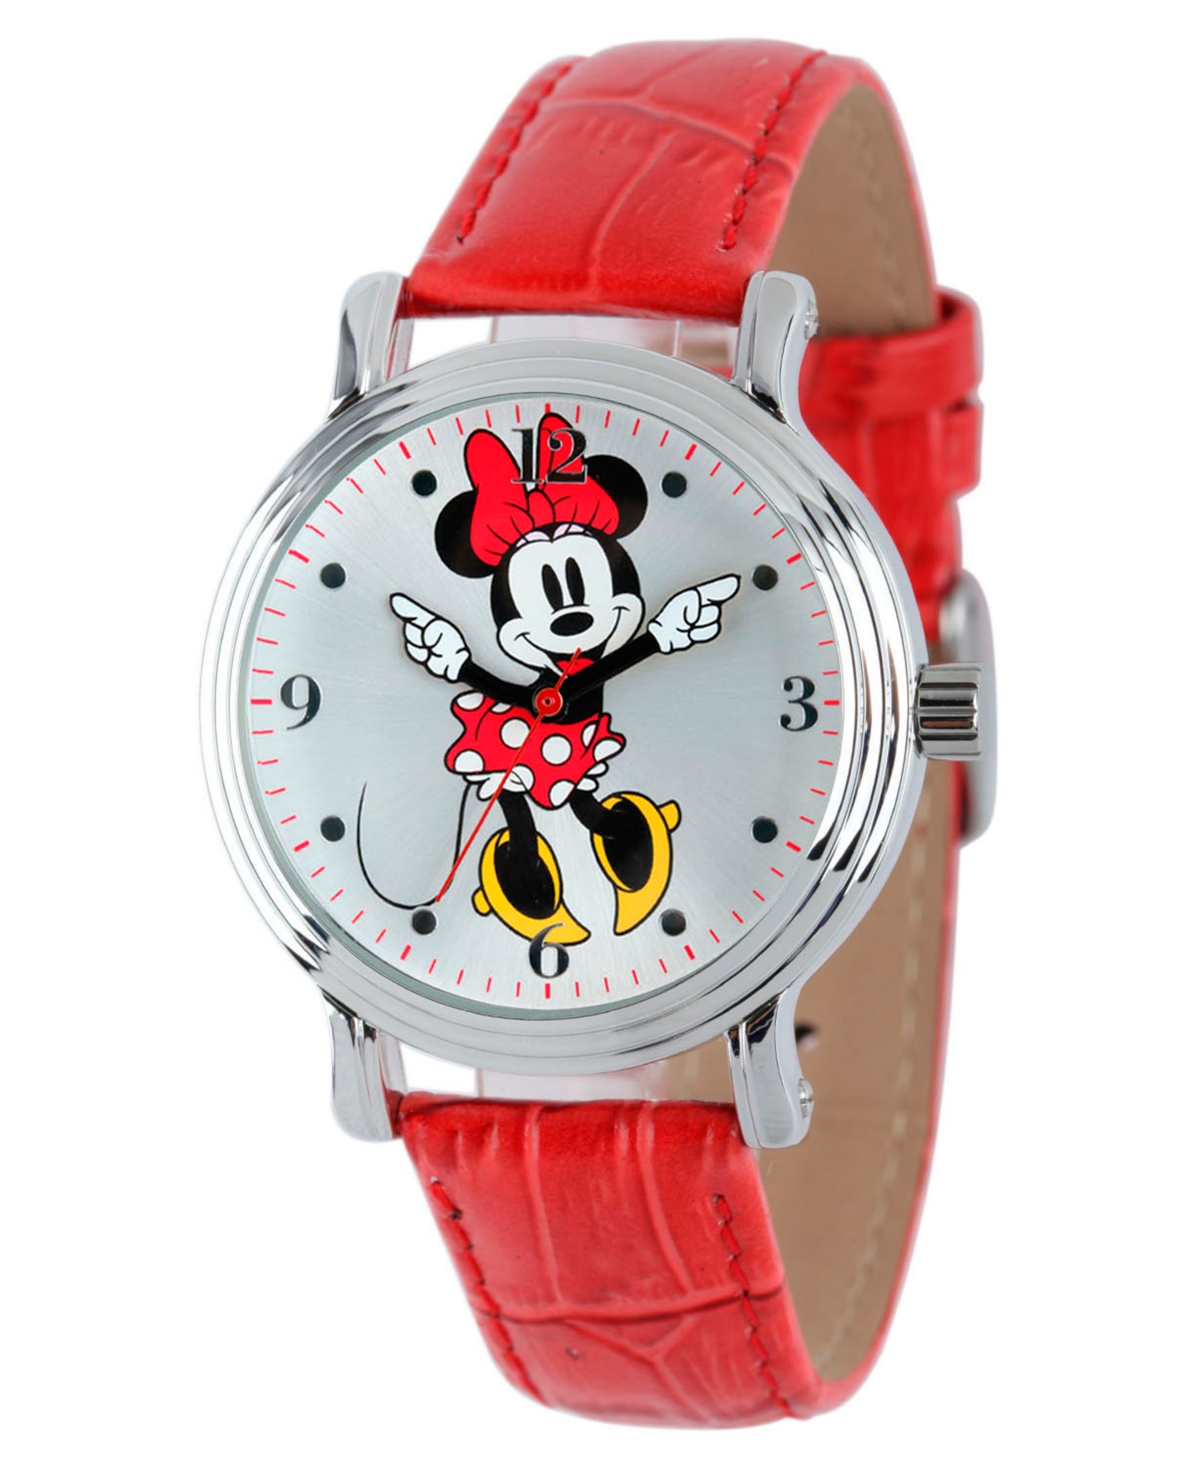 Ewatchfactory Disney Minnie Mouse Women's Shiny Silver Vintage Alloy Watch